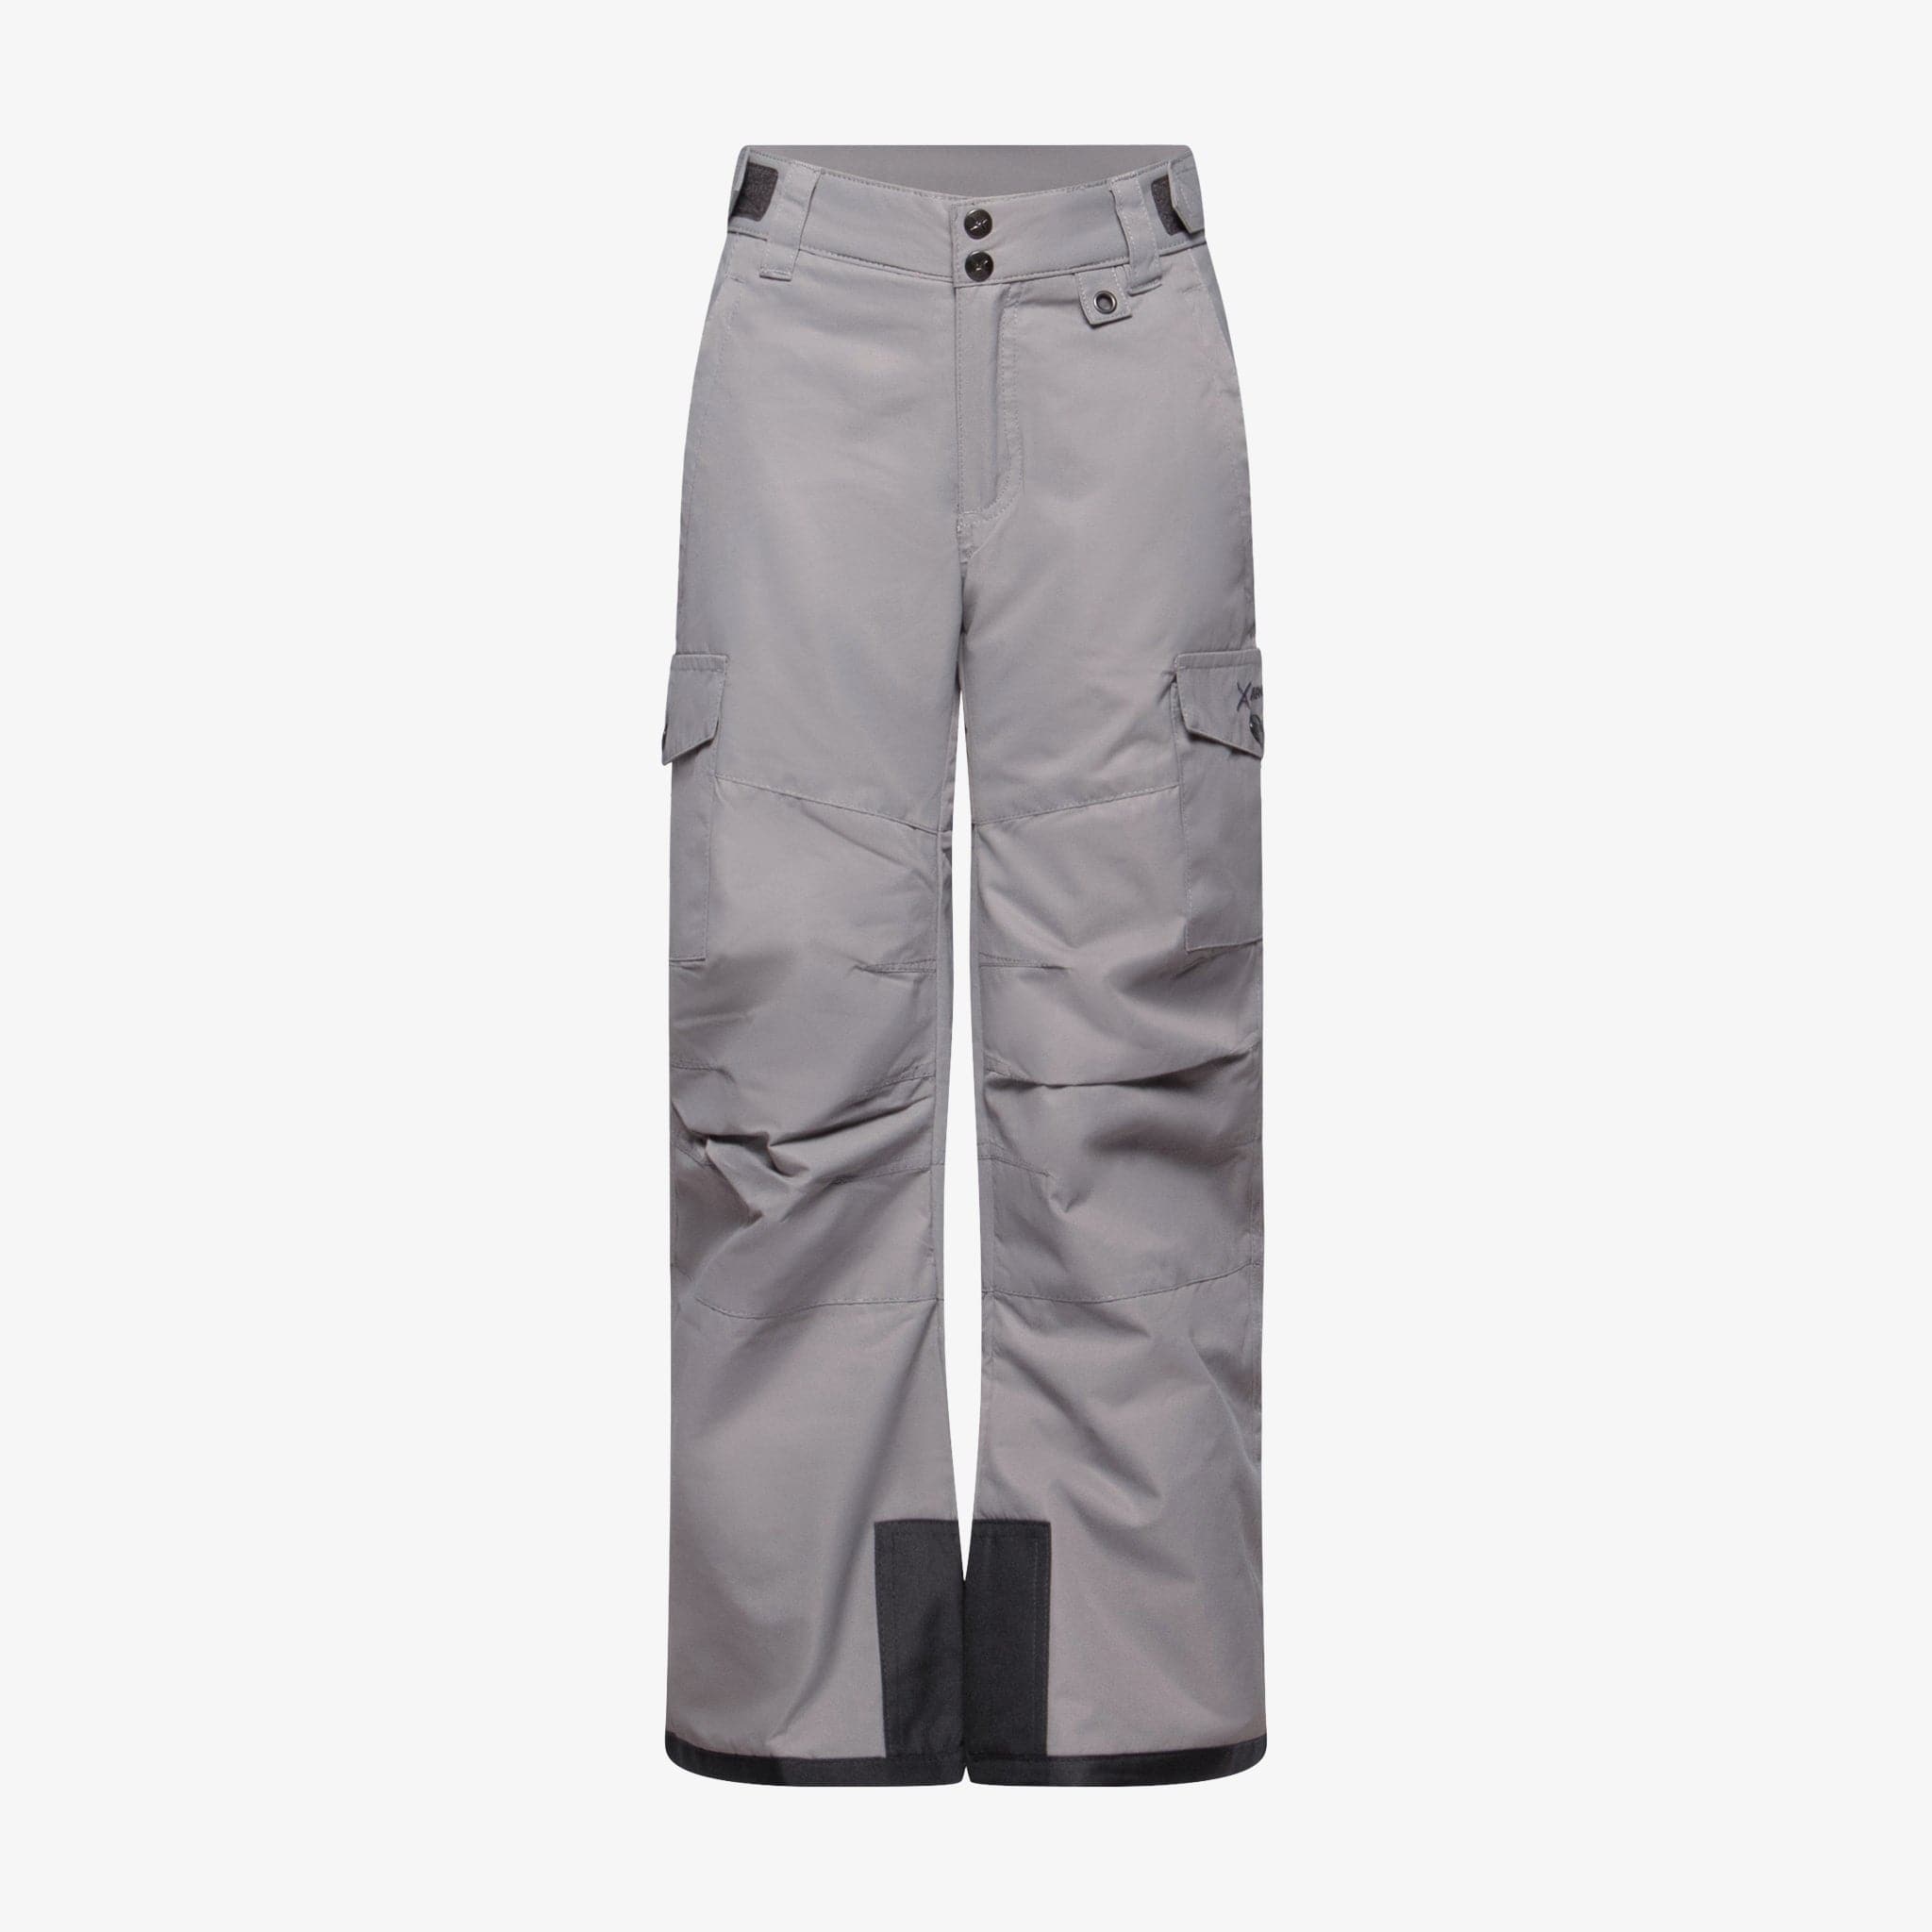 Arctix Snow Pants Men Black Snowboard Gear Regular Fit Insulated - Small